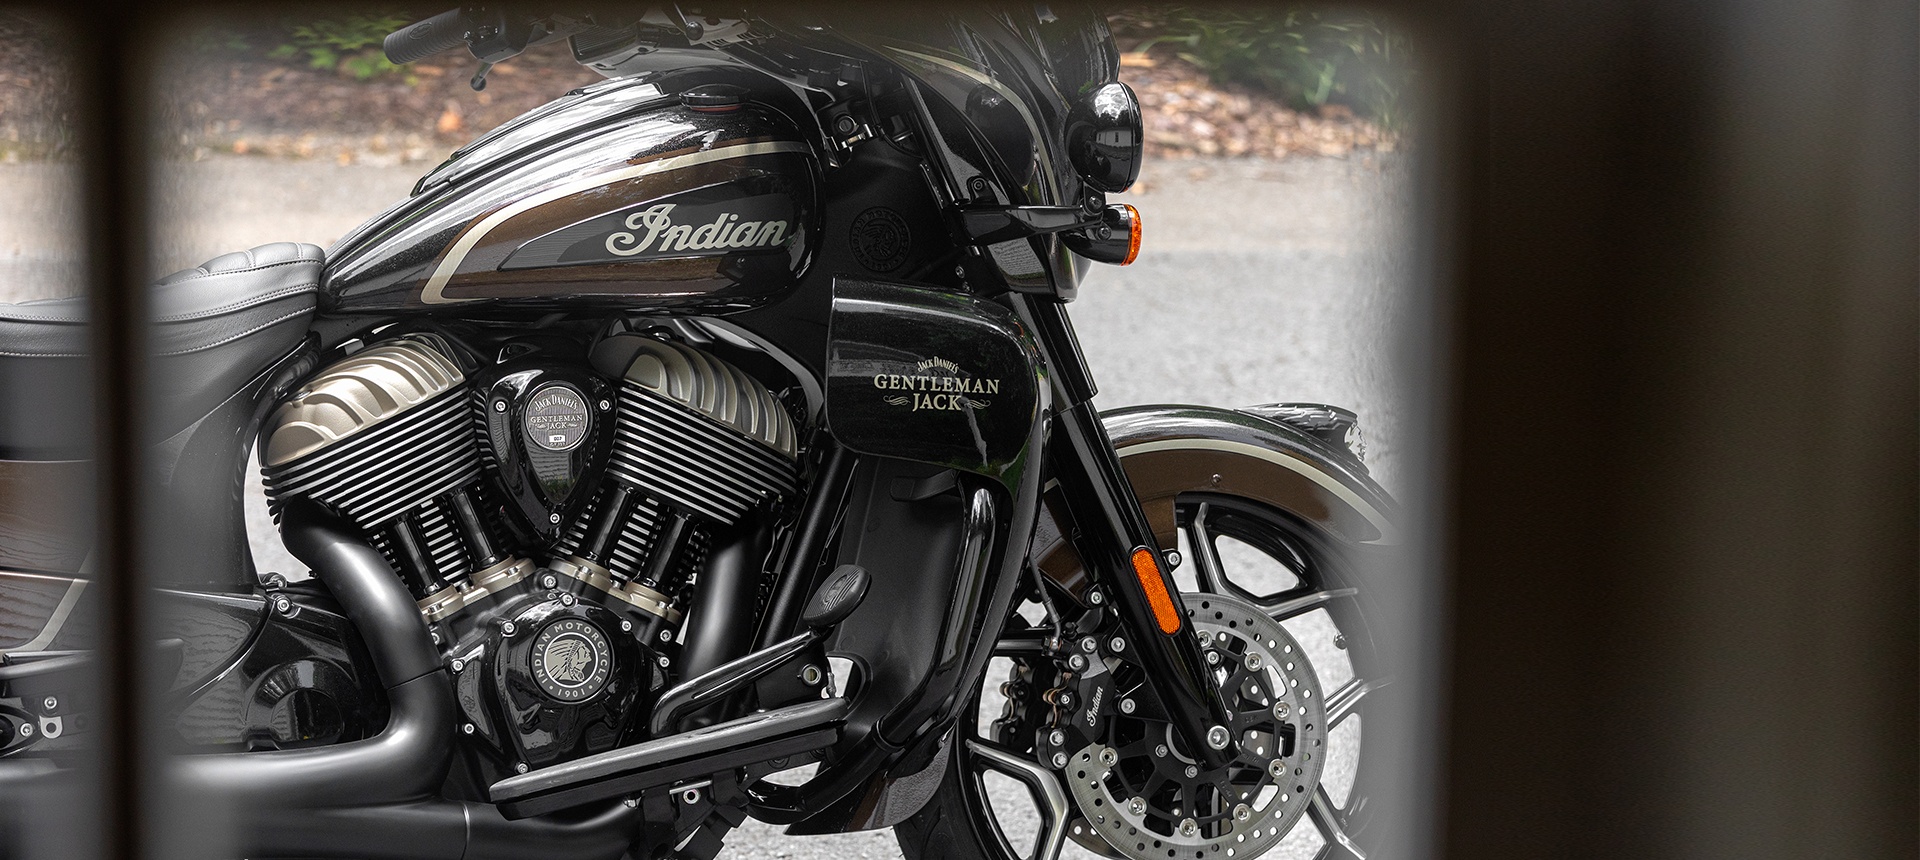 2020 Jack Daniel S Limited Edition Indian Roadmaster Dark Horse Motorcycle En Ca